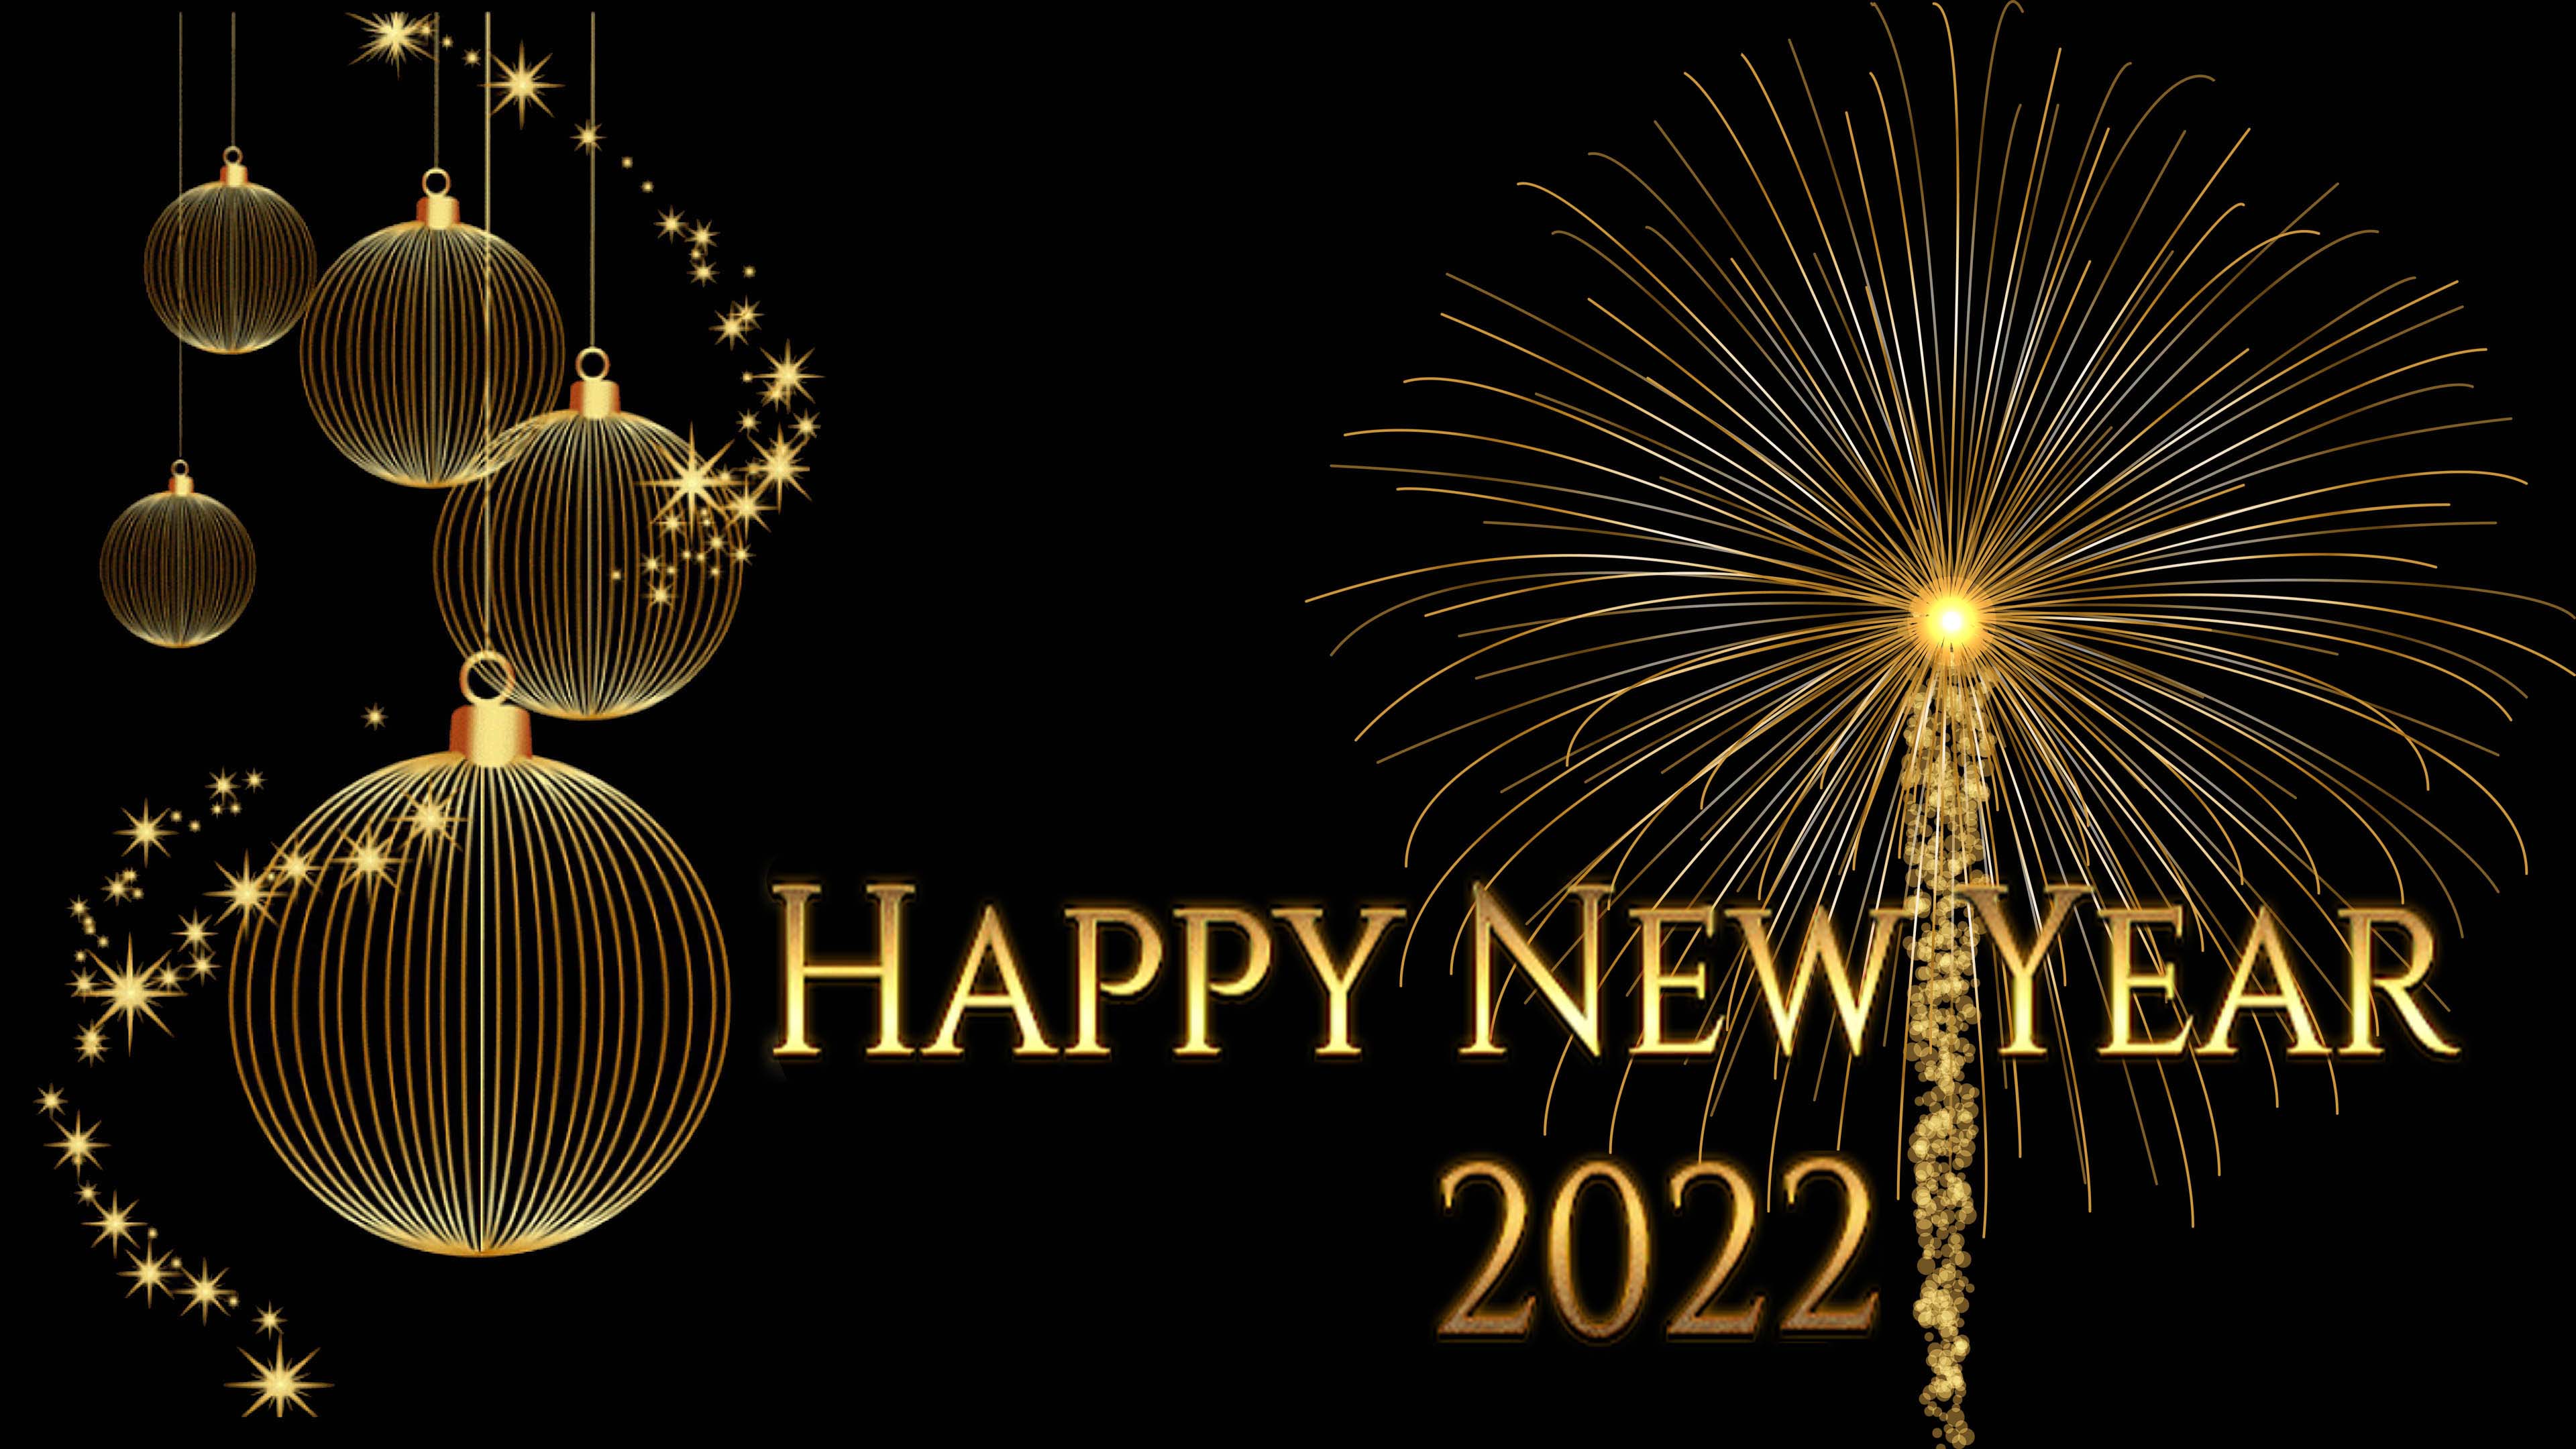 happy new year love wallpaper 2022